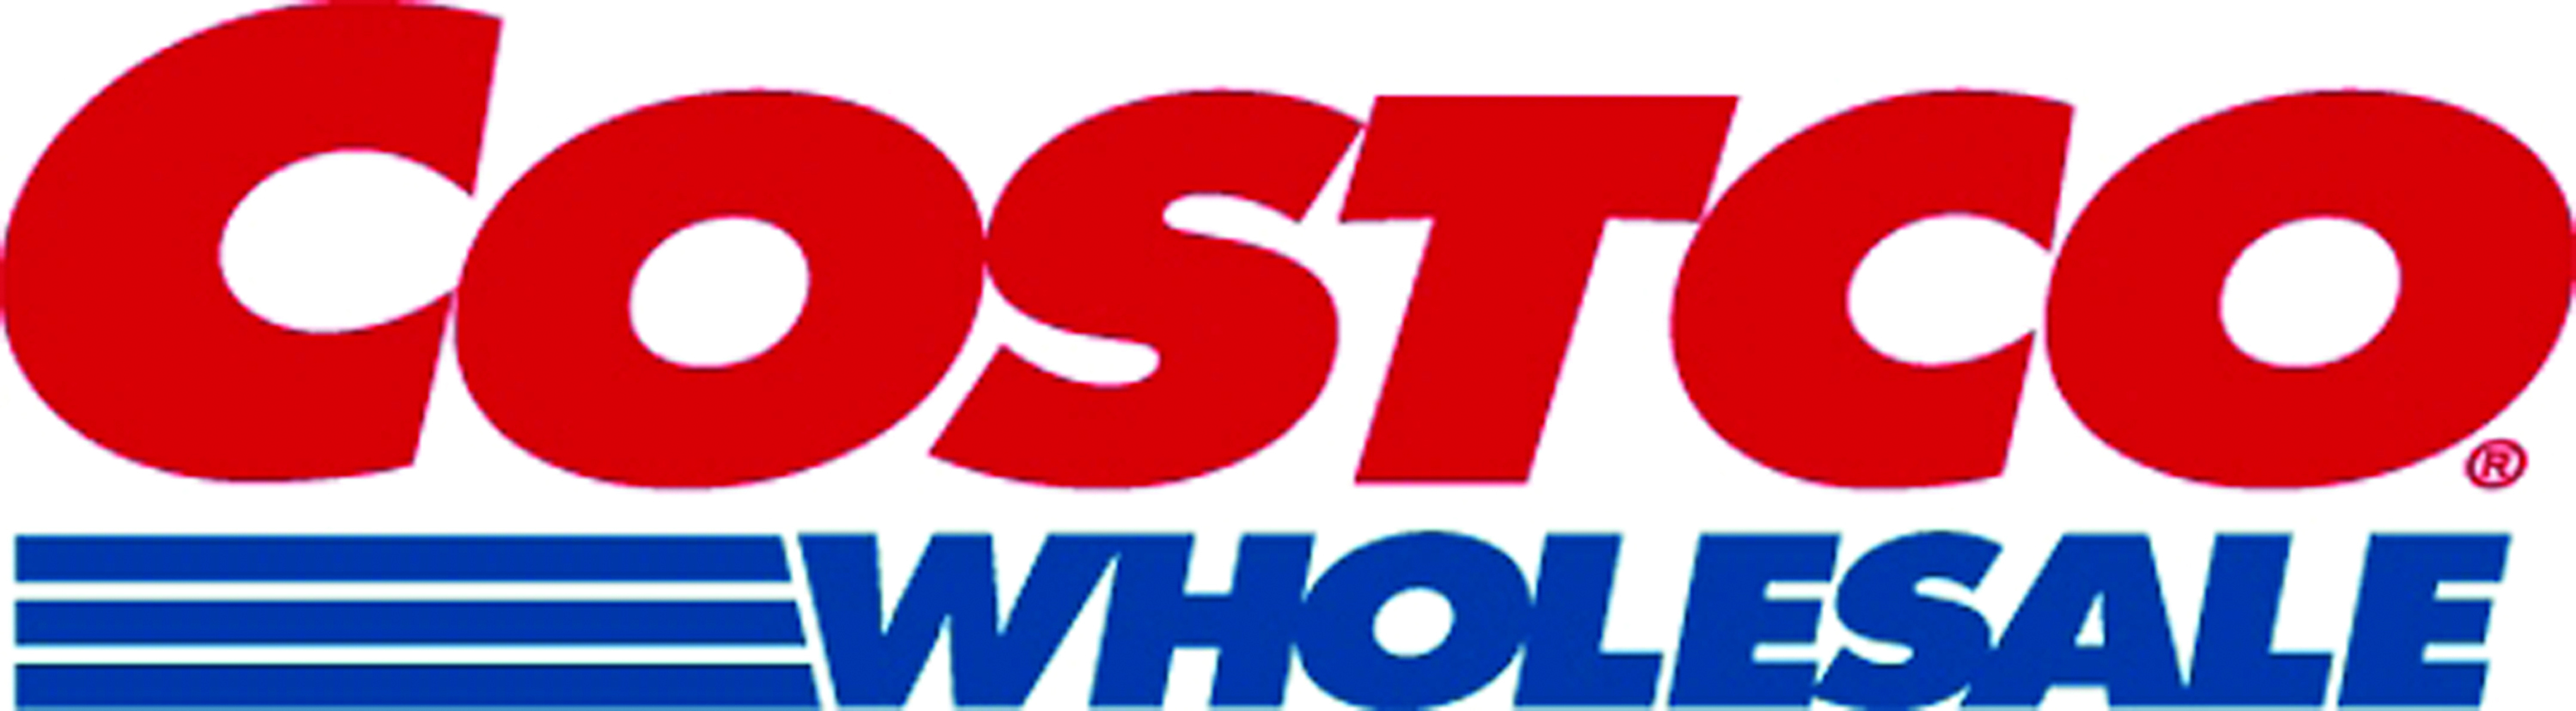 Costco Wholesale Logo Download In Hd Quality - vrogue.co